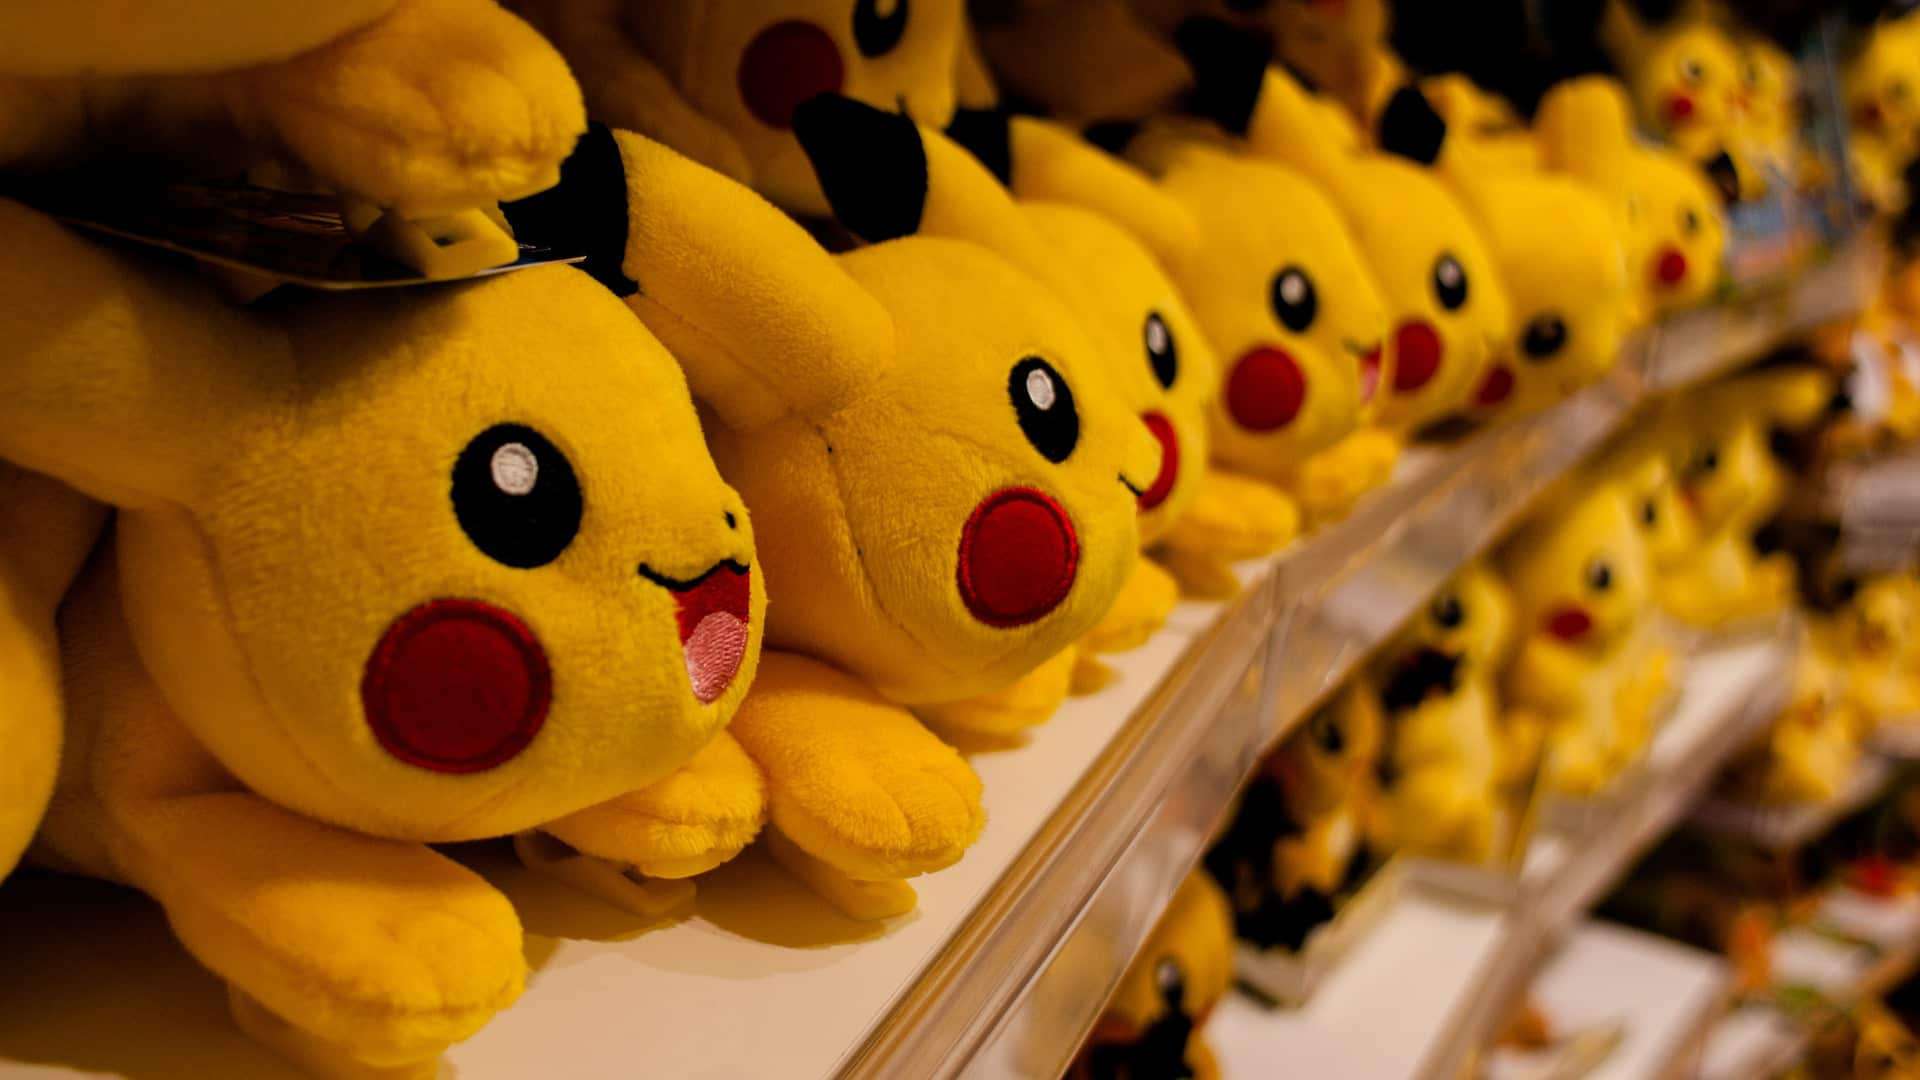 Pokemon pikachu plush toys are lined up on a shelf. (No modifications made)